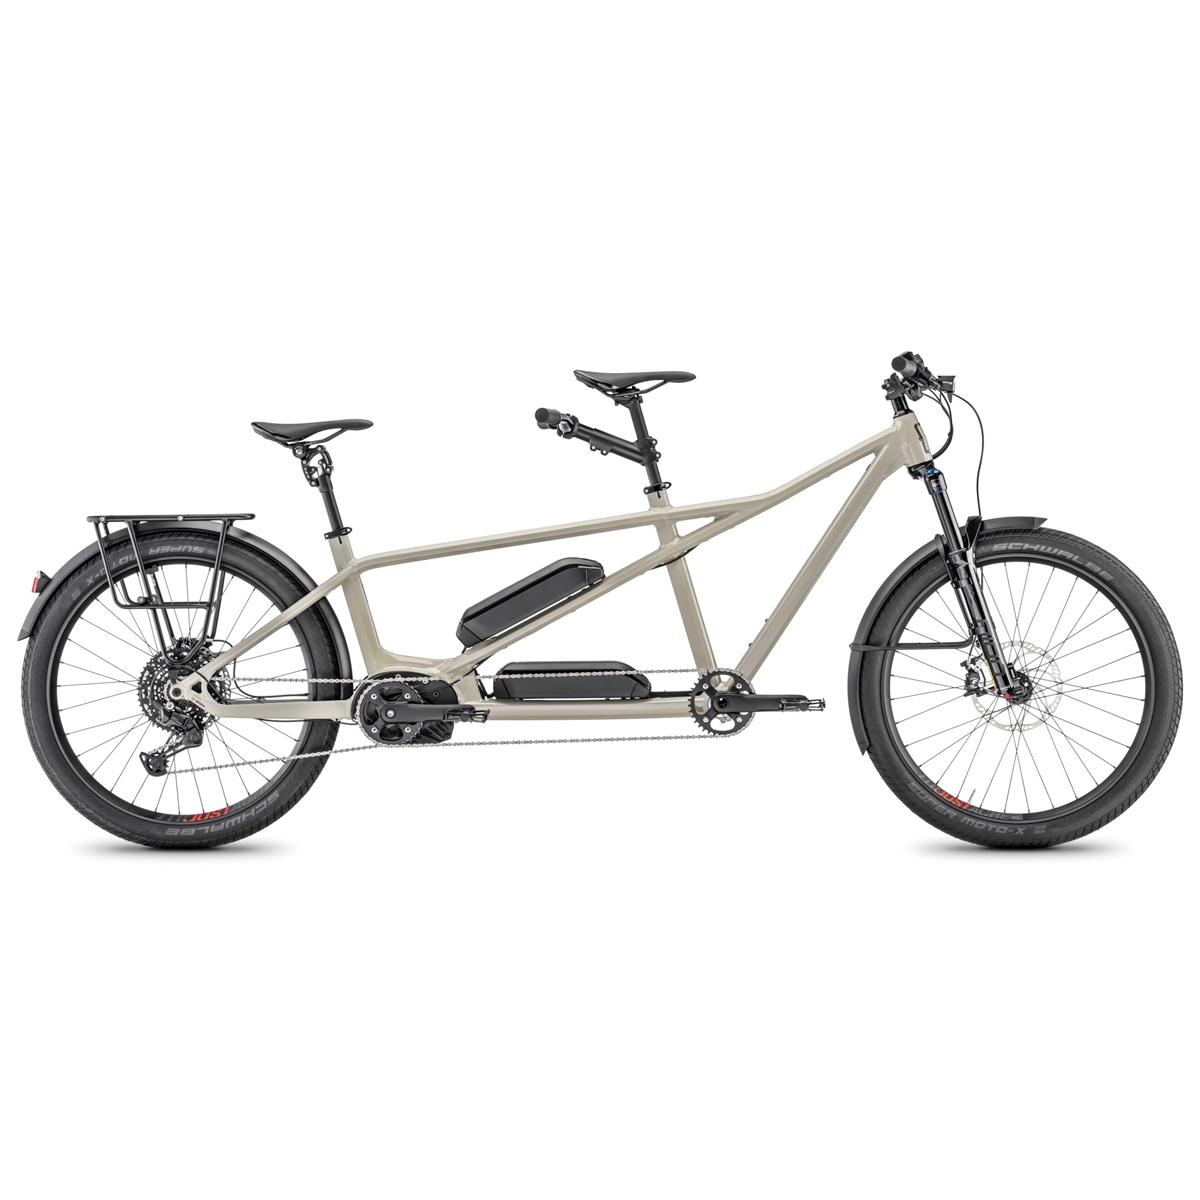 Tandem E-bike Samedi 27 X2 TRK 27.5 140mm 11v 545+545Wh Bosch Performance Line CX Smart Size M/L